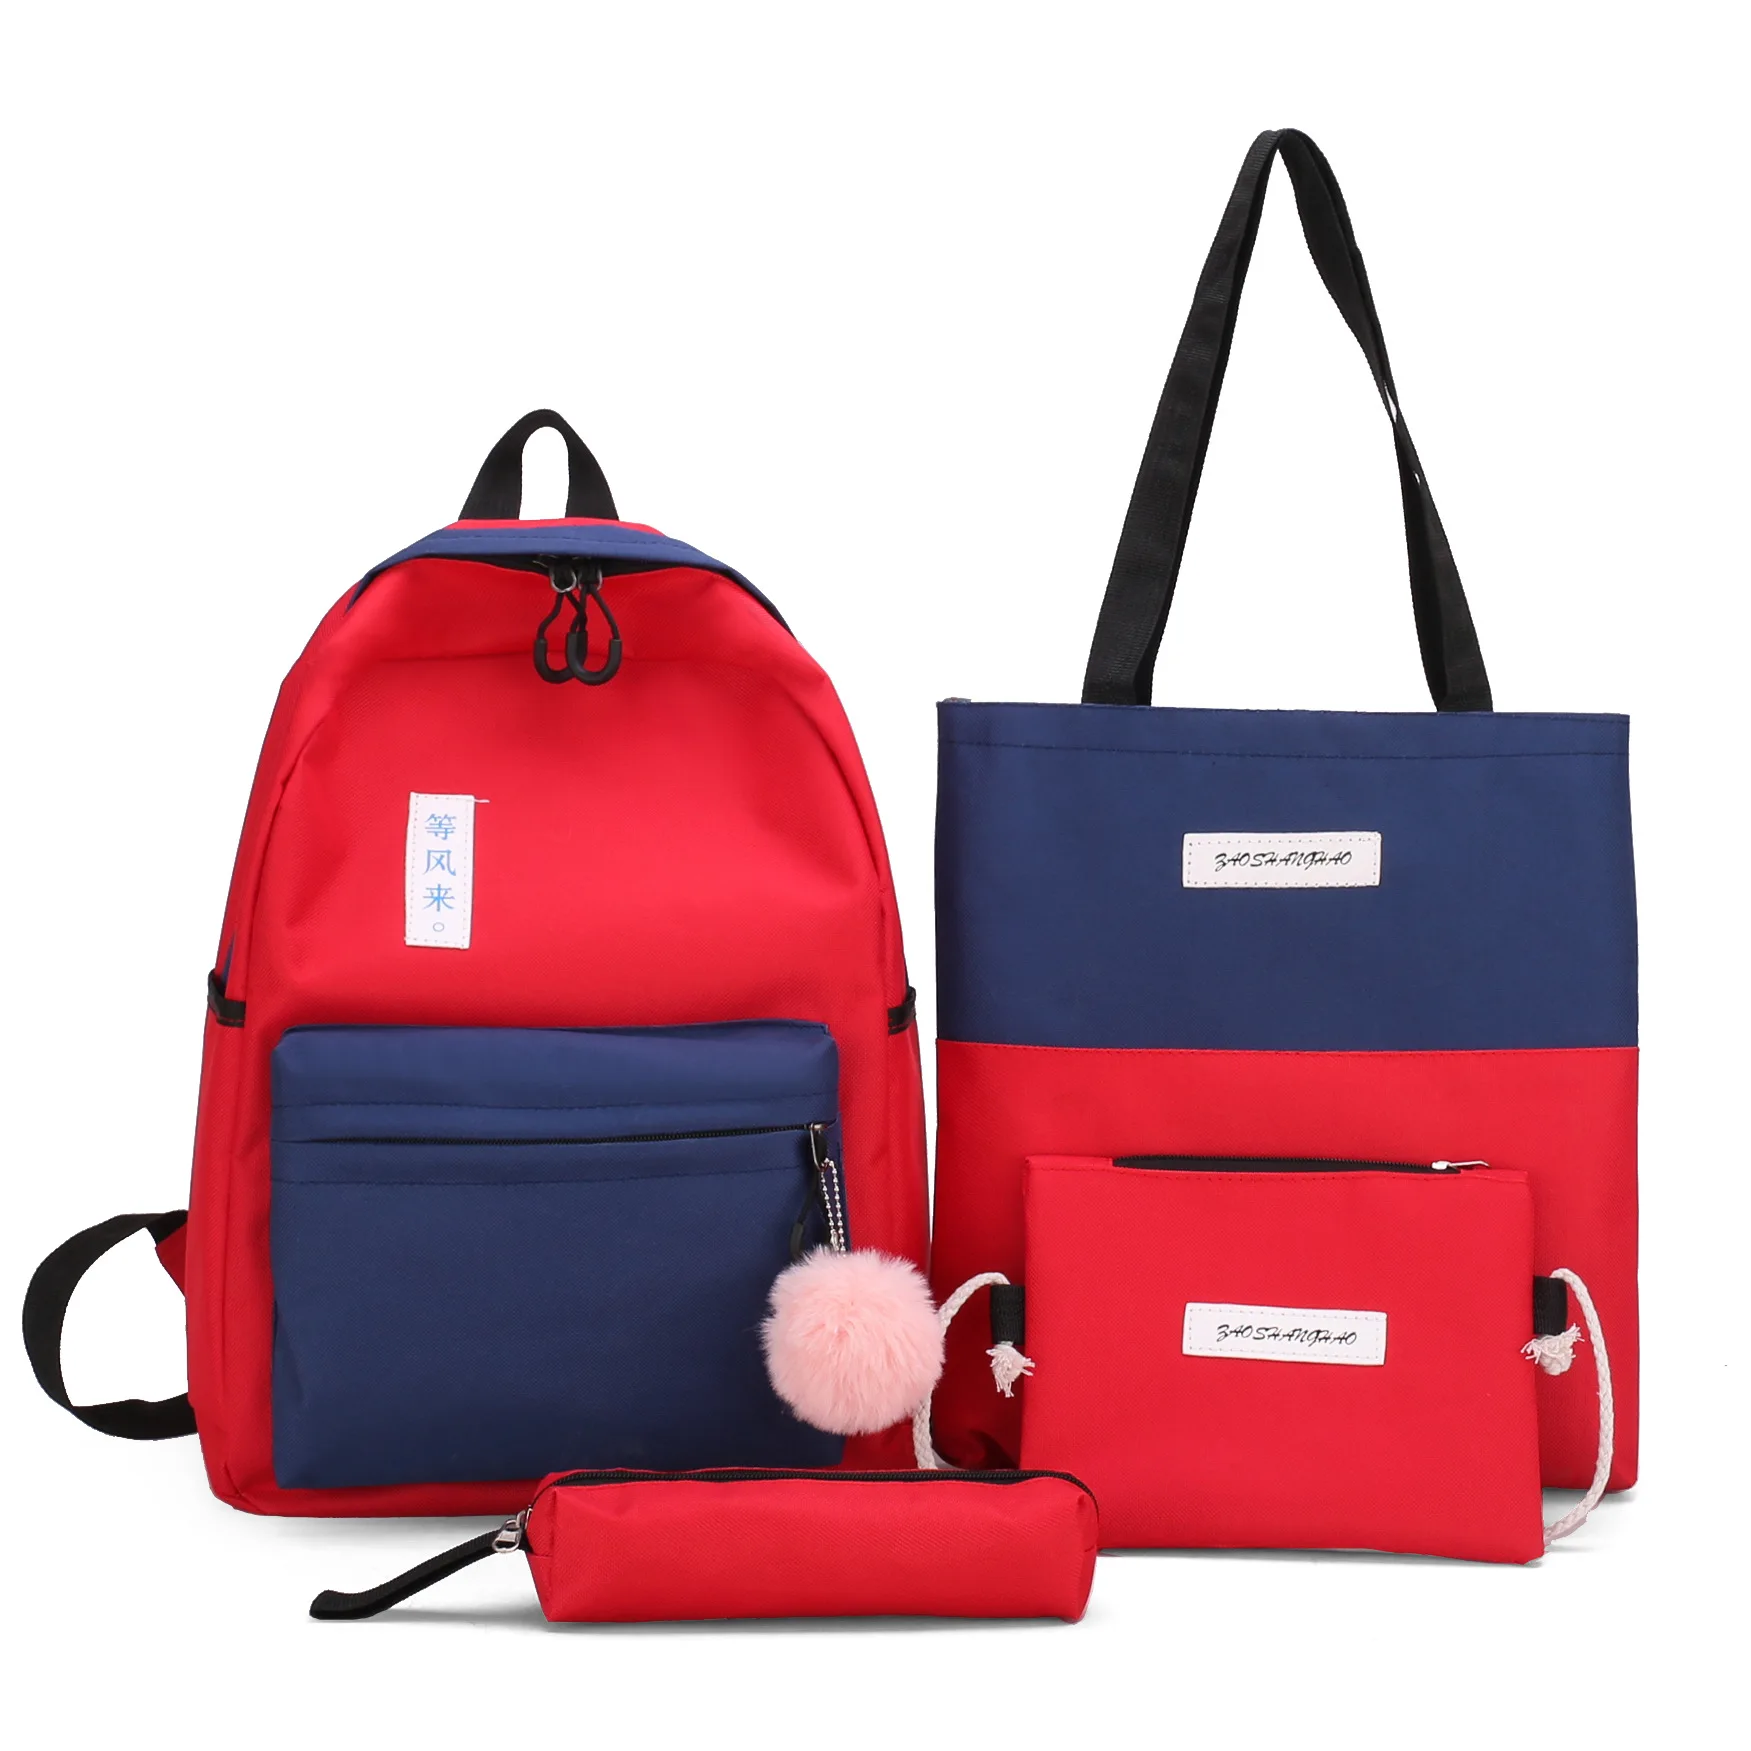 

2021 HOT Design Canvas Teens Backpack for School Girls School Bookbag Set Travel Daypack 4pcs Backpack Bag sets, More than 10 colors or customized